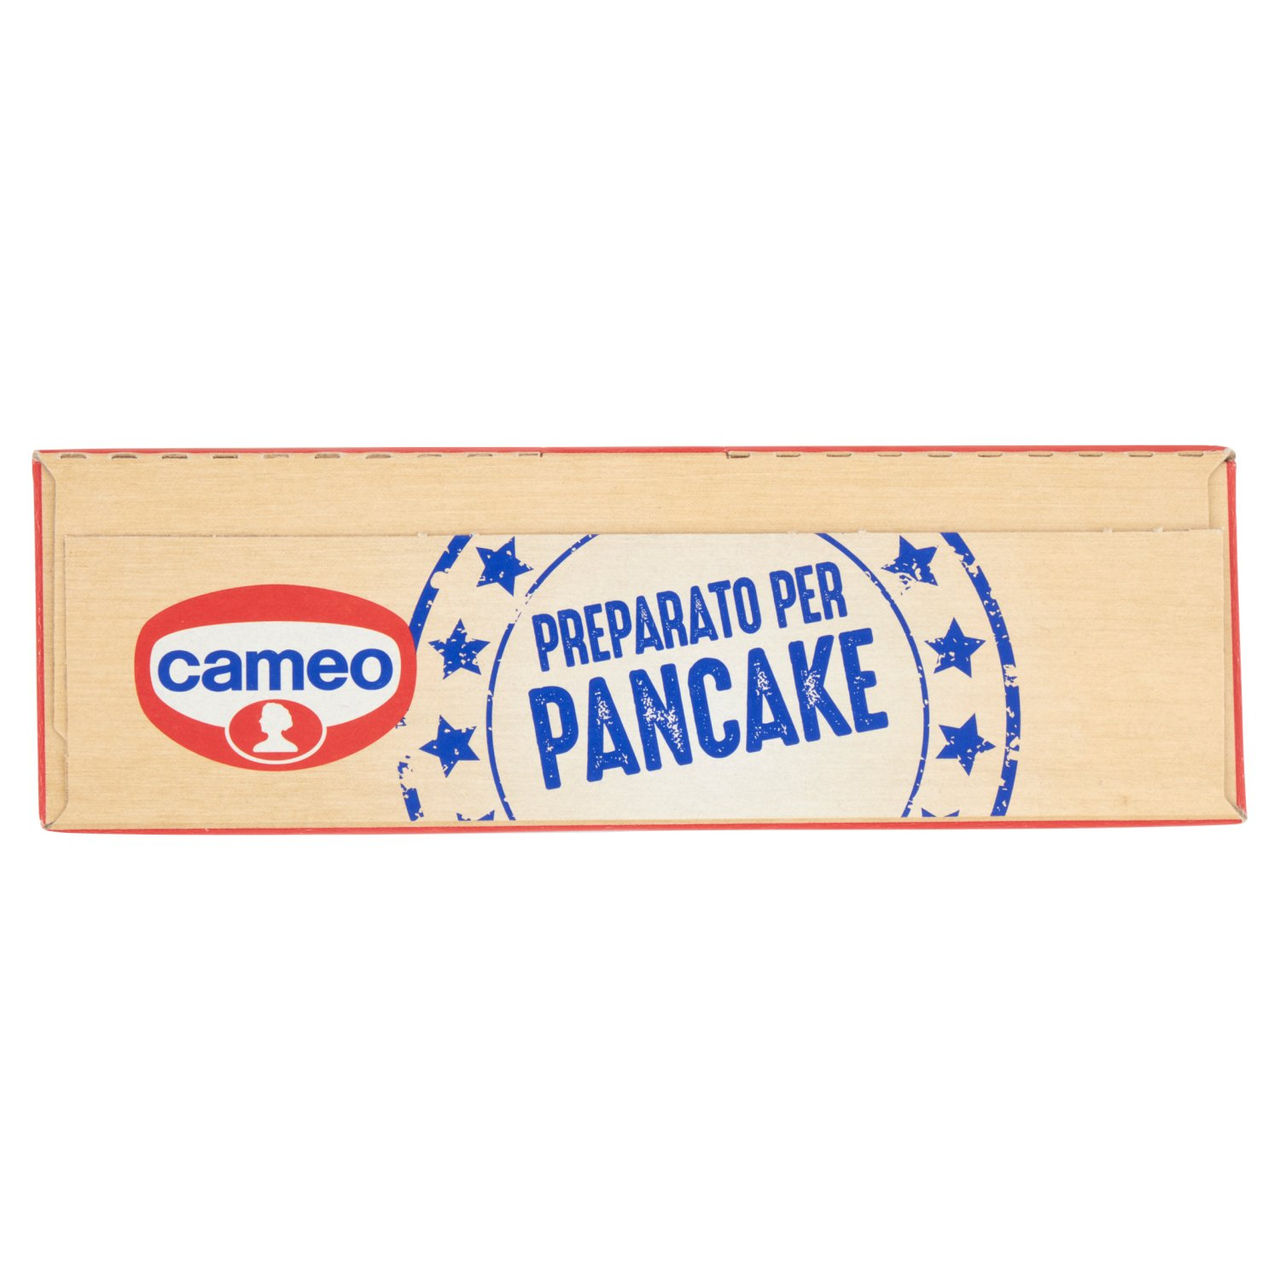 Cameo Preparato per Pancakes 250 g online